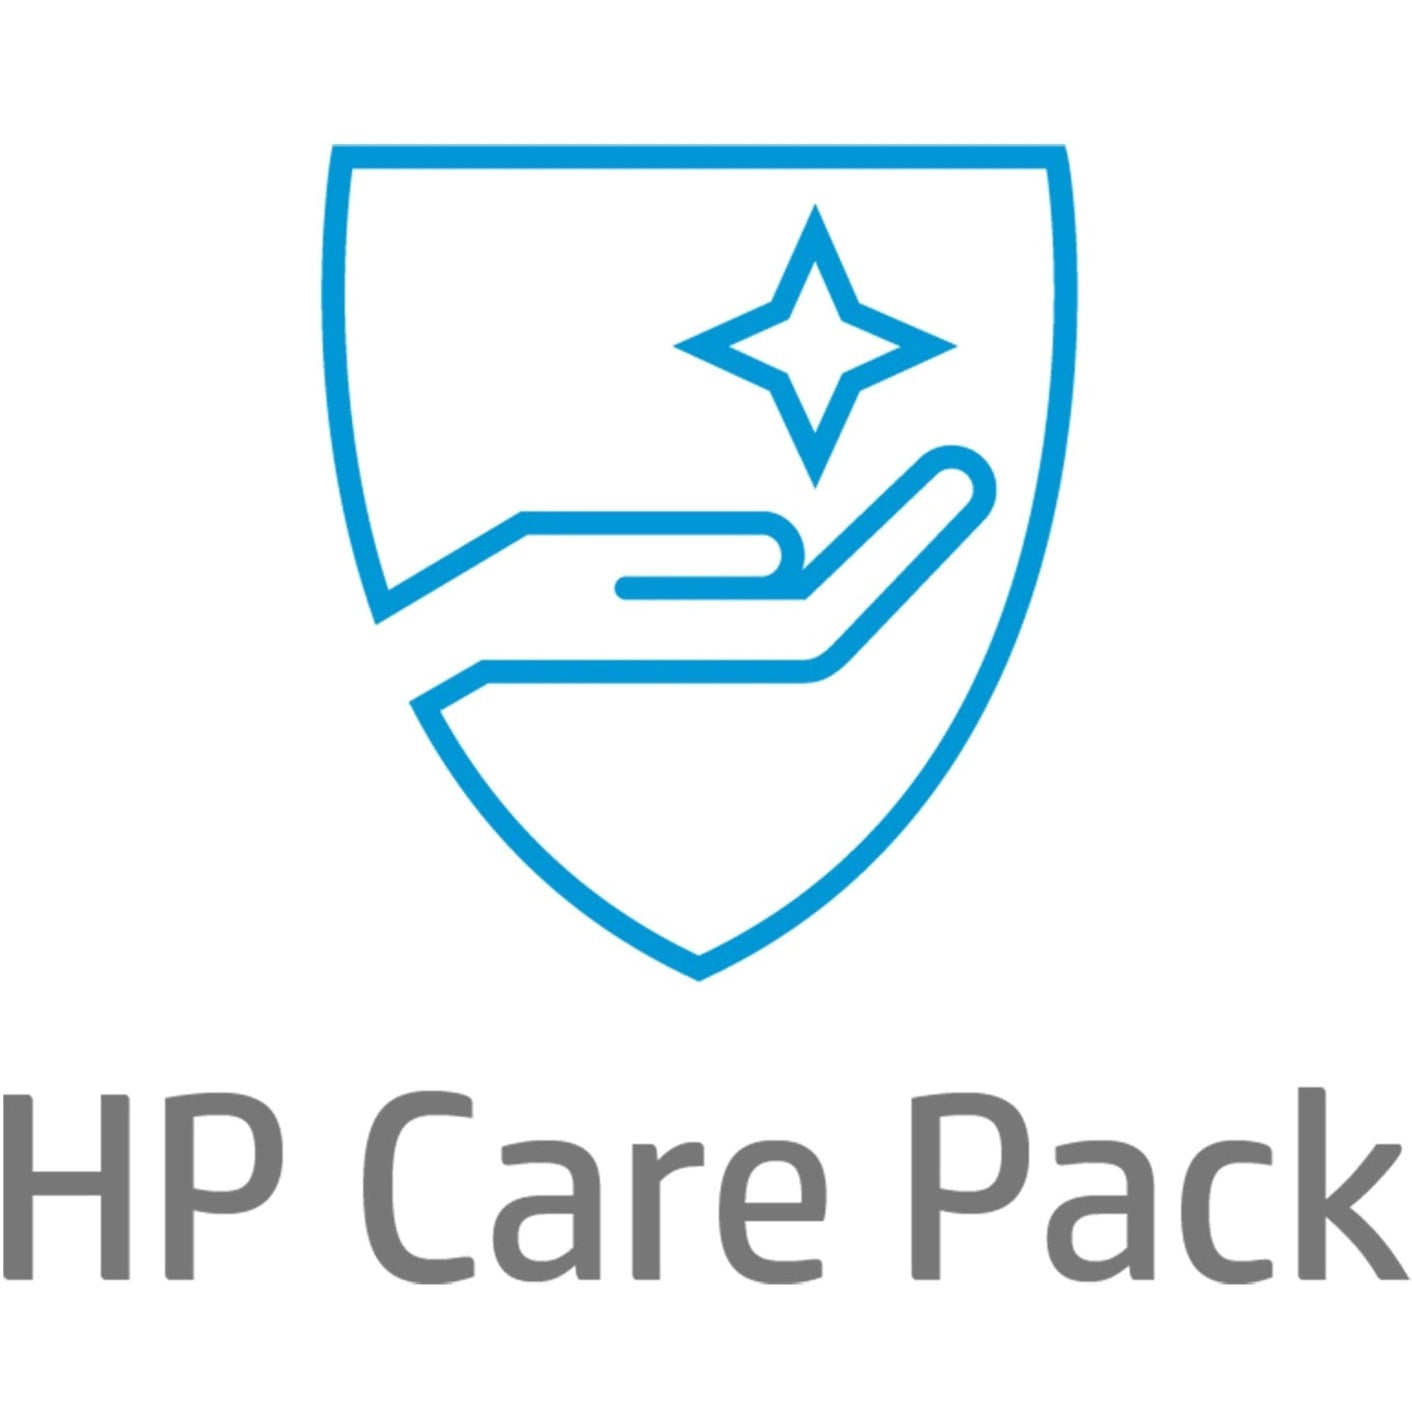 HP Care Pack - 3 Year - Service (UL653E)